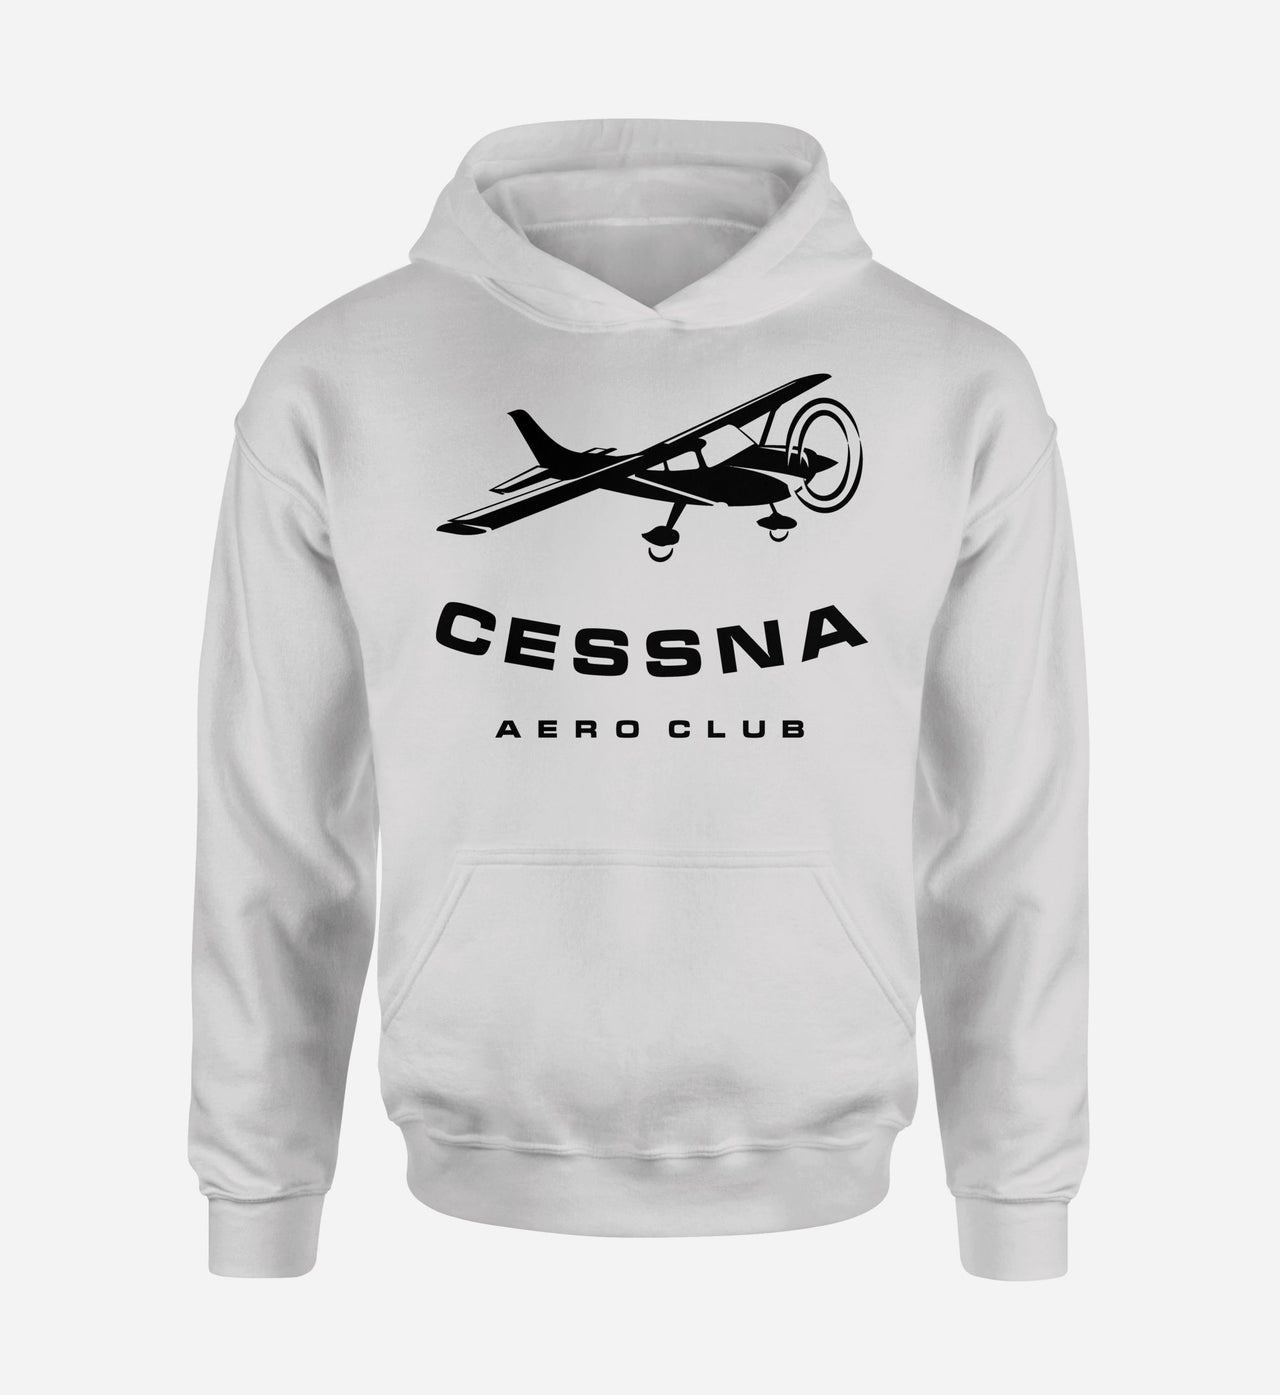 Cessna Aeroclub Designed Hoodies